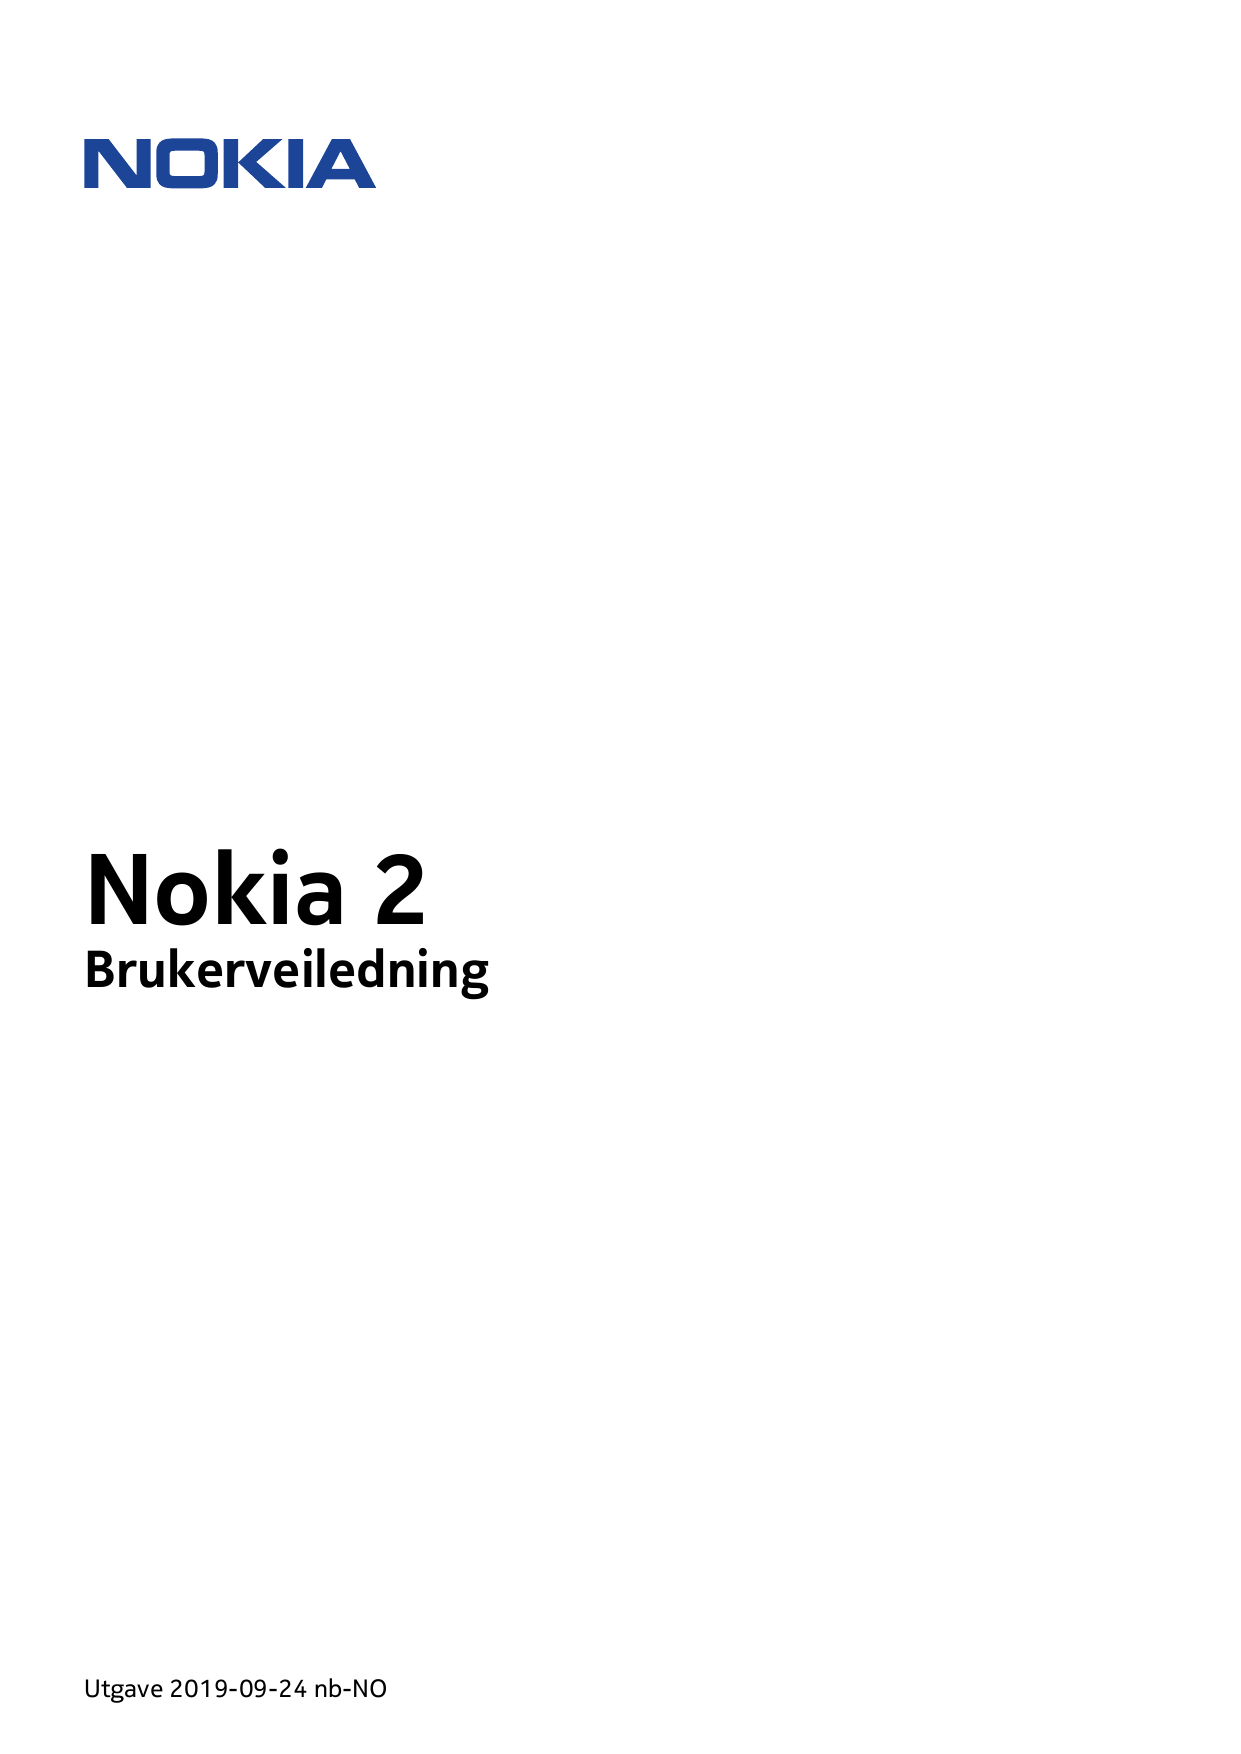 Nokia 2BrukerveiledningUtgave 2019-09-24 nb-NO